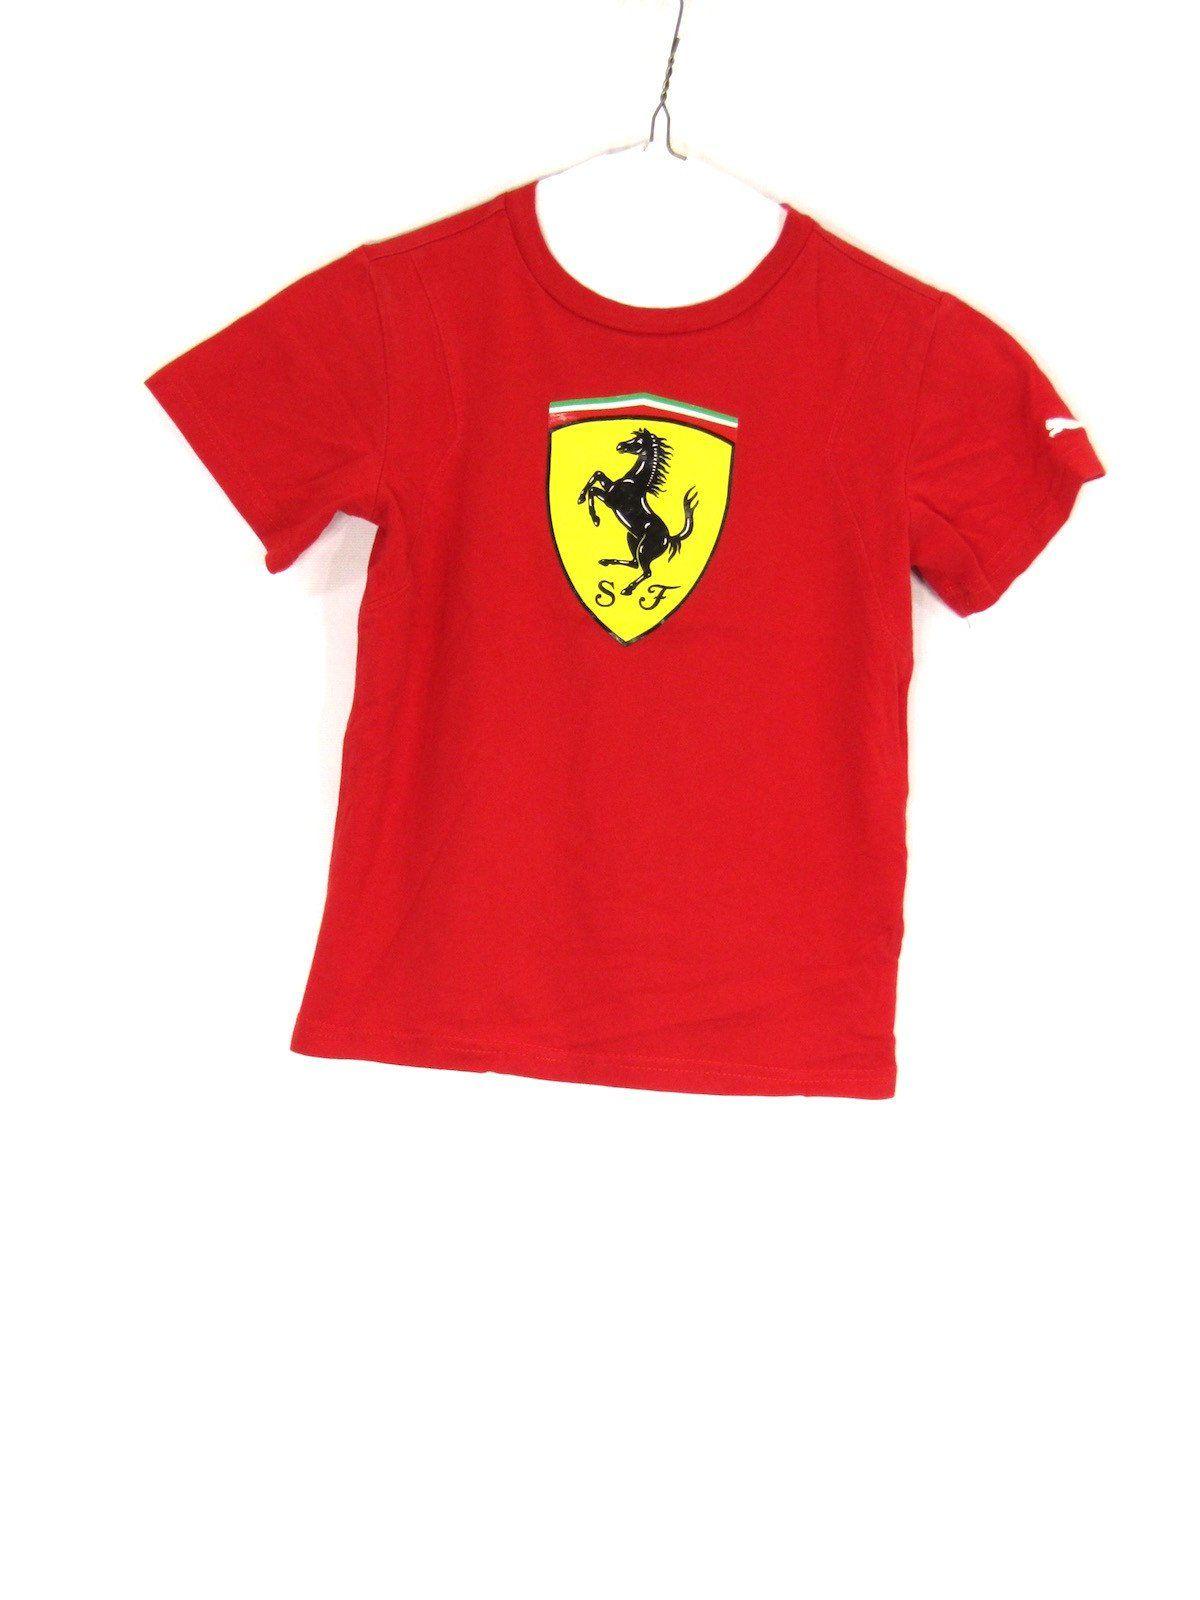 Red and Yellow Horse Logo - SCUDERIA FERRARI Boy Girl Red Yellow Horse Emblem Short Sleeve T Shirt